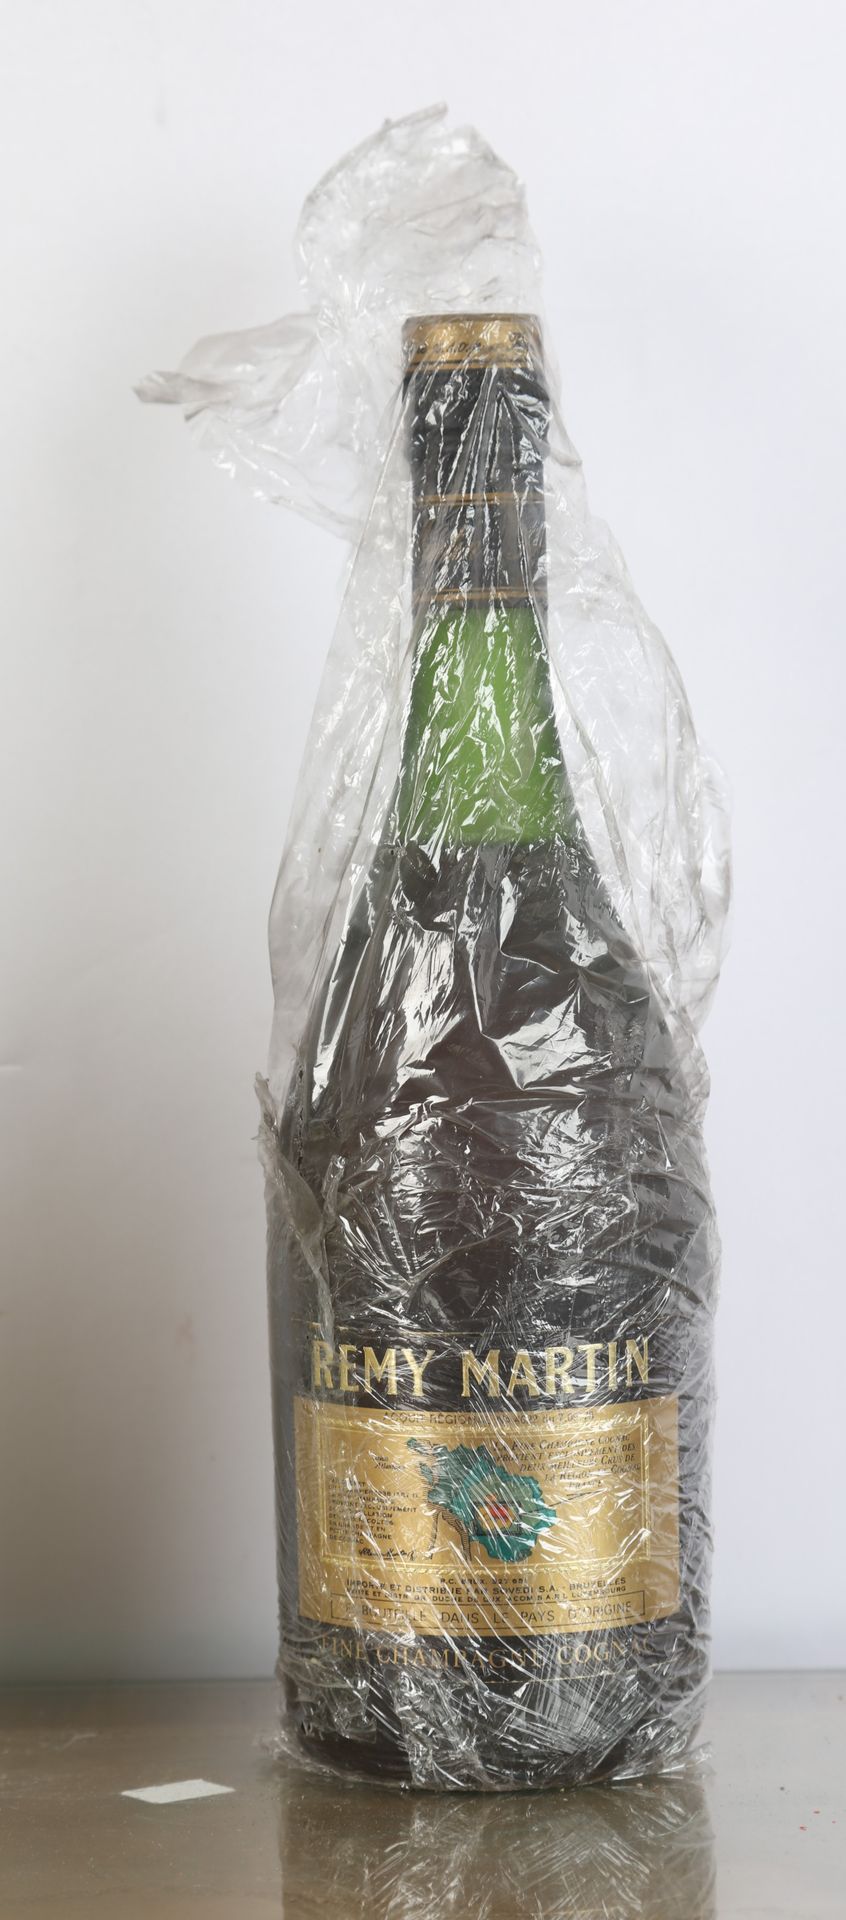 Null Cognac, Rémy Martin, (ref 2) et - 1 bouteille Dry Gin Gordons, (ref 2)